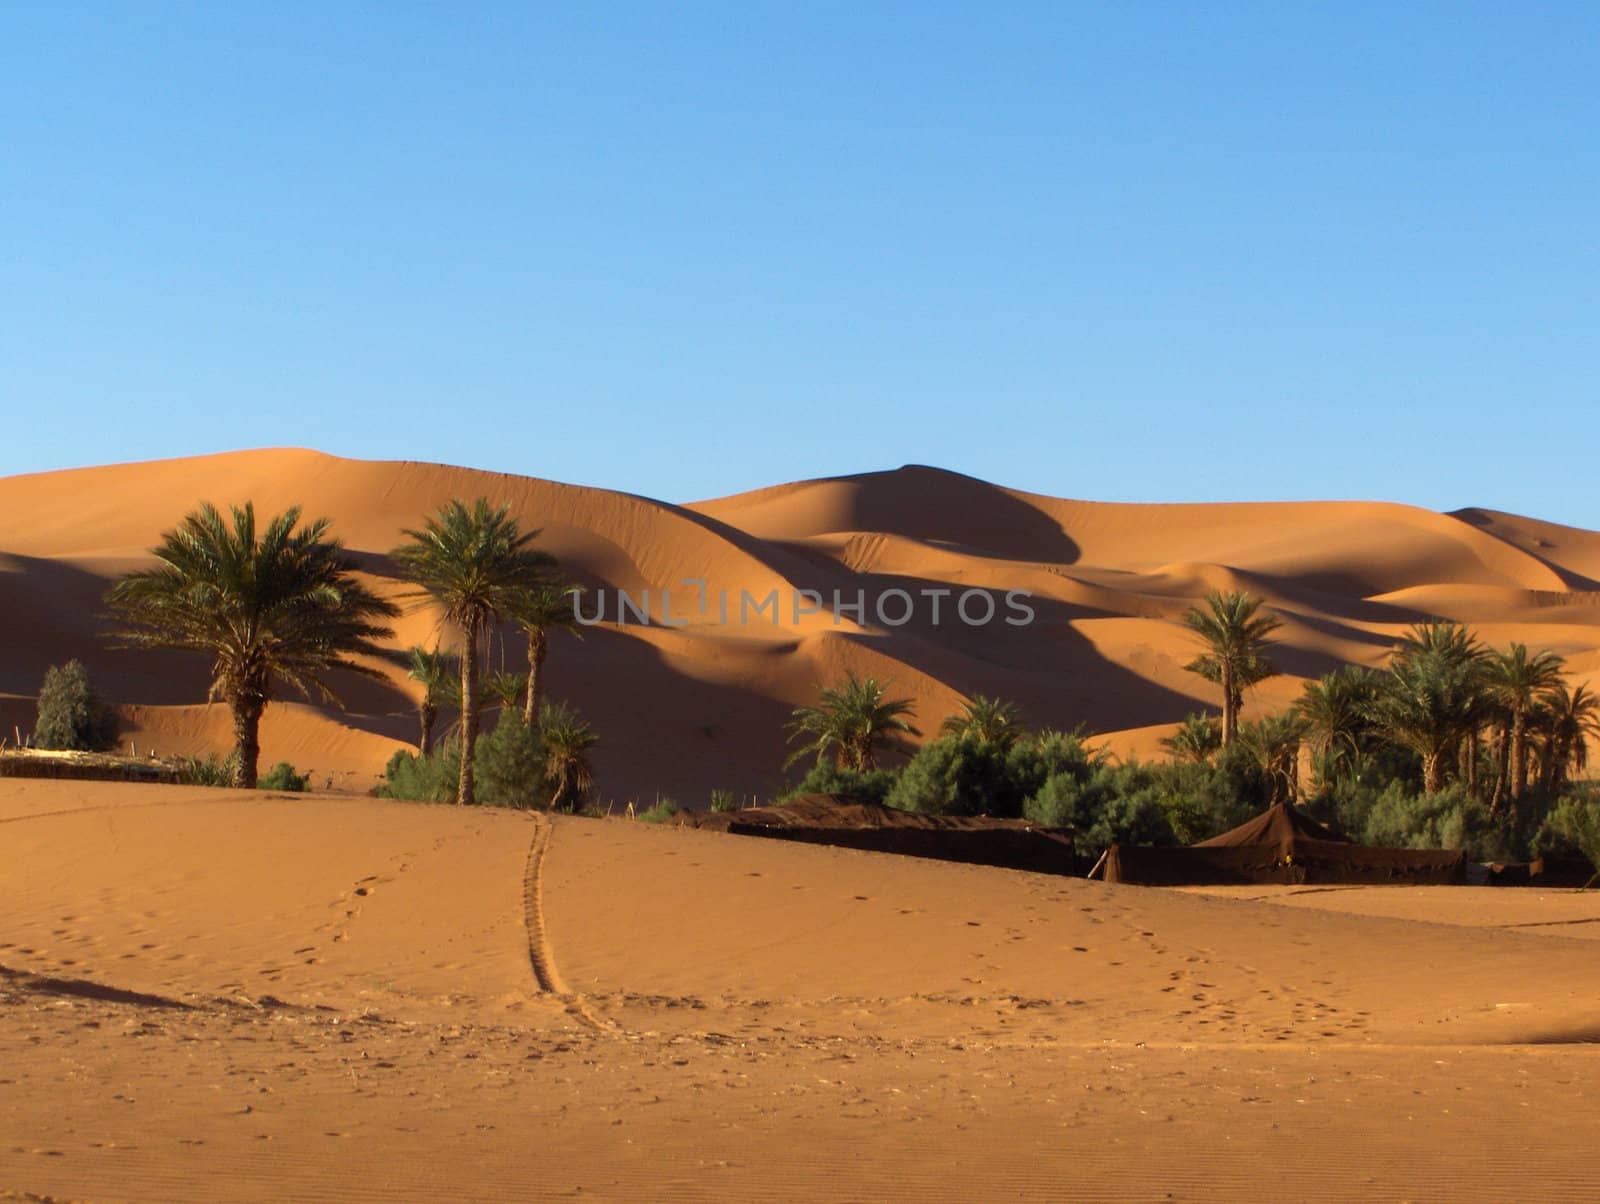 Oasis in the Sahara, near Merzouga, Morocco.